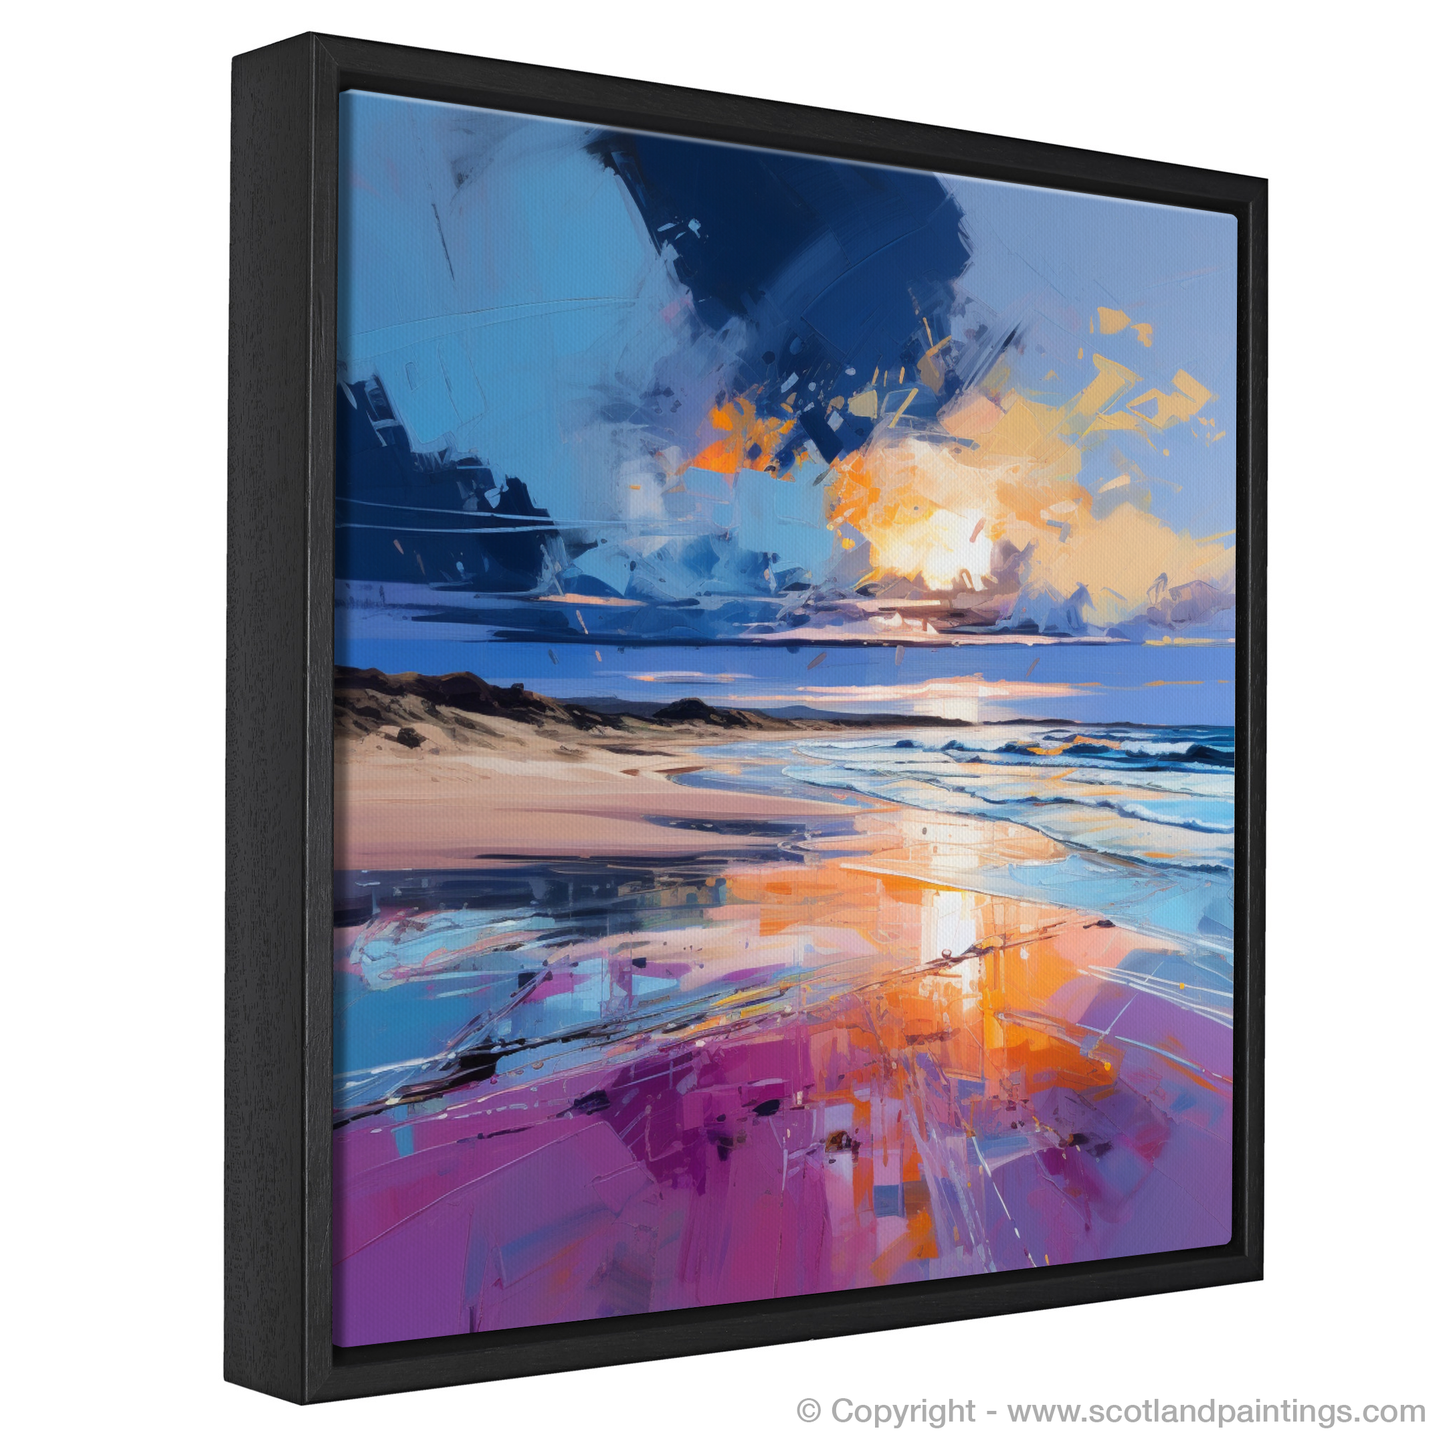 Painting and Art Print of Balmedie Beach at dusk entitled "Dusk Embrace at Balmedie Beach".